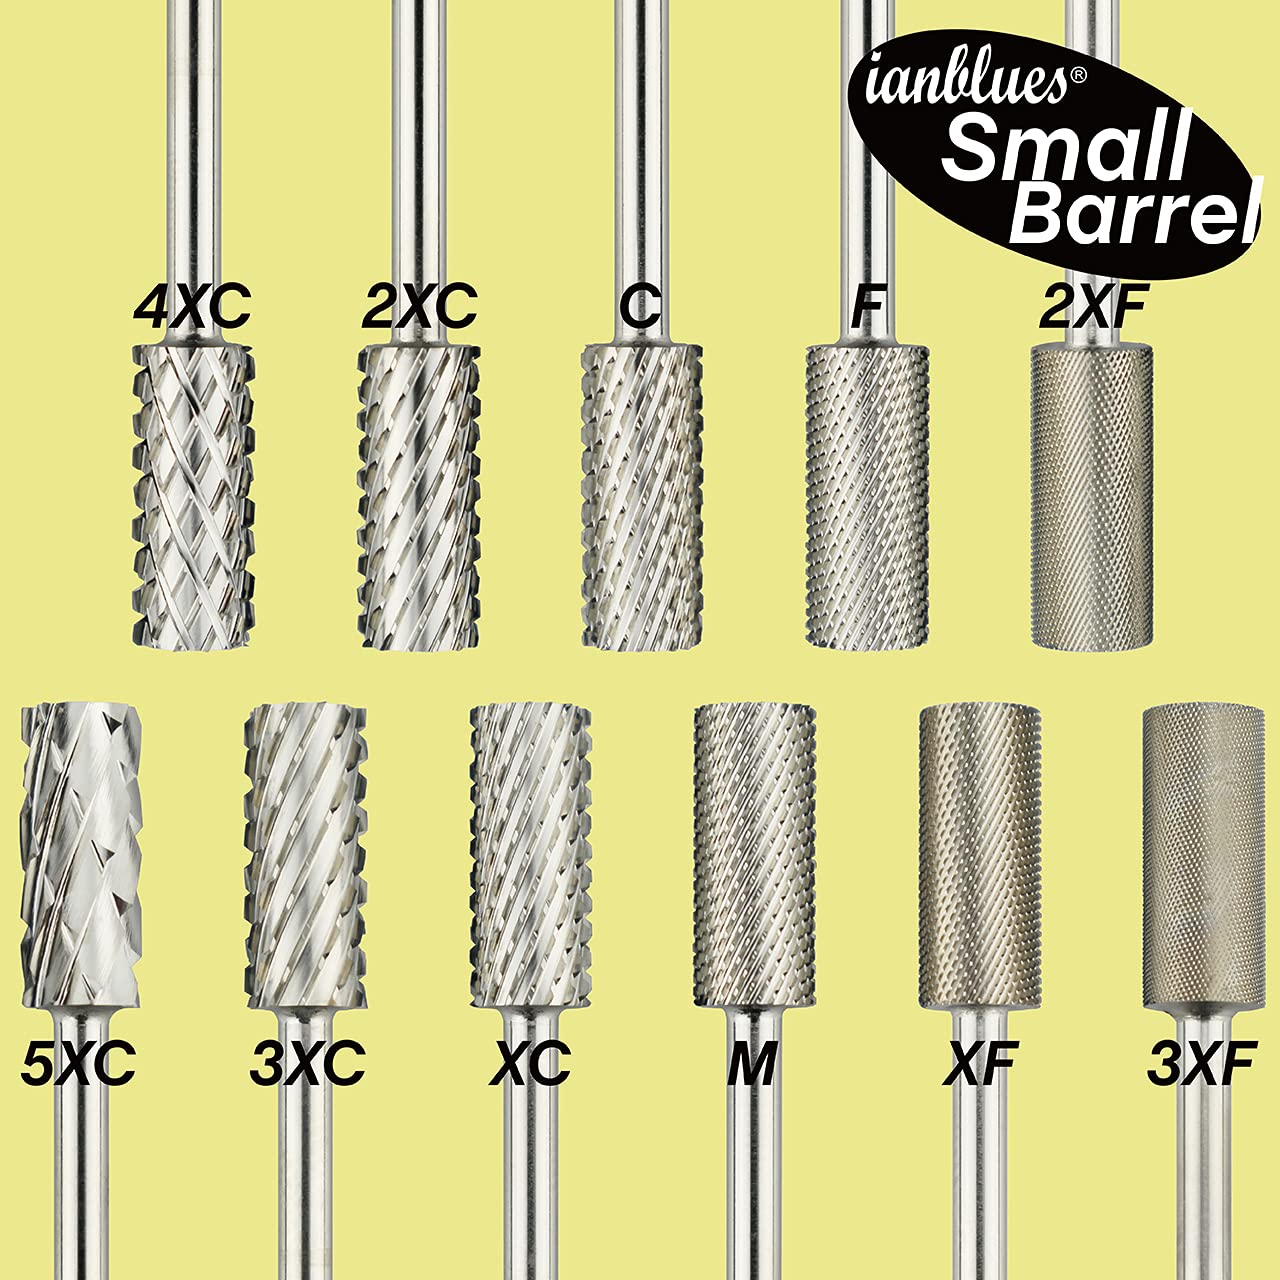 ianblues Nail Drill Bit, Small Barrel, Professional E-filing for Acrylics and Gel Nails, Slim Edition, 3/32” (Coarse -C)